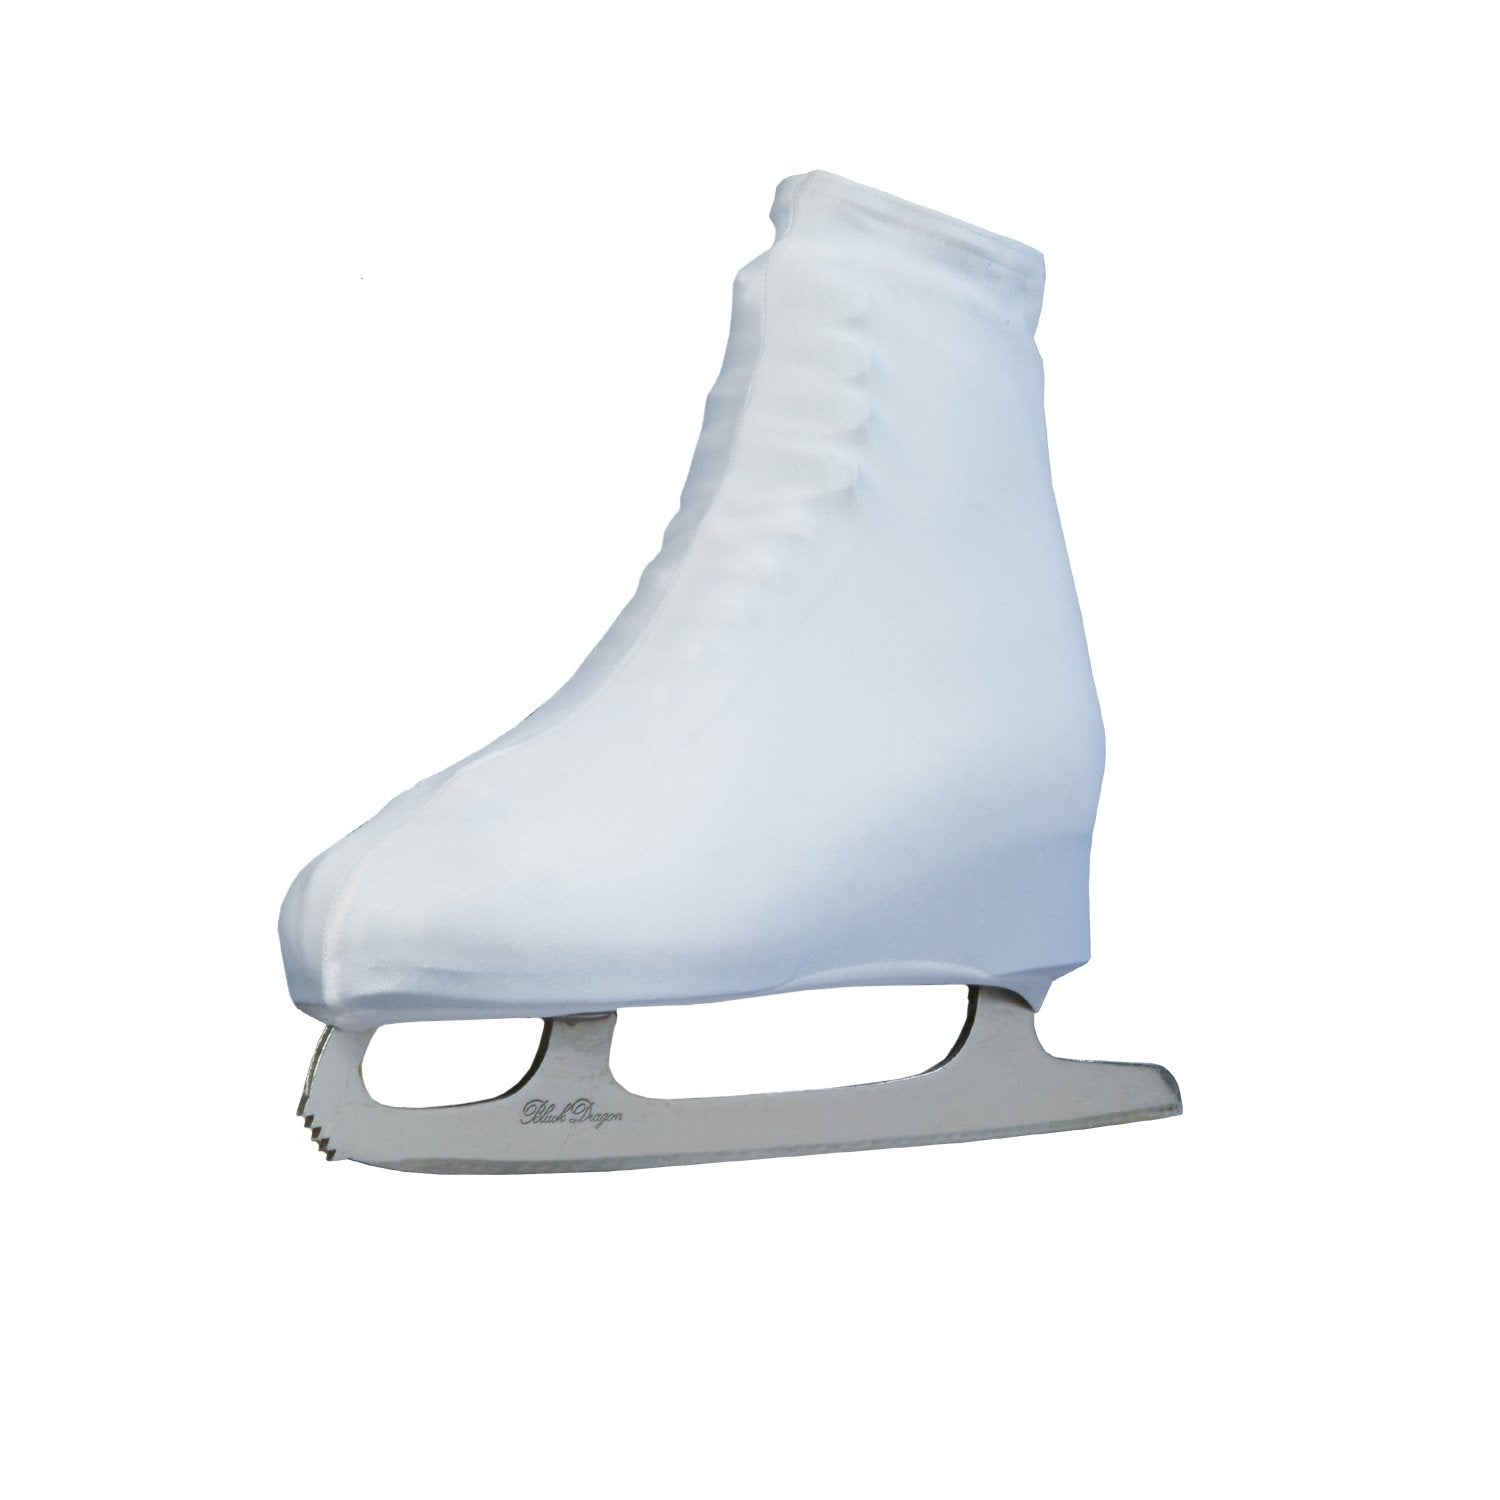 figure-skate-white-booties-covers-slips